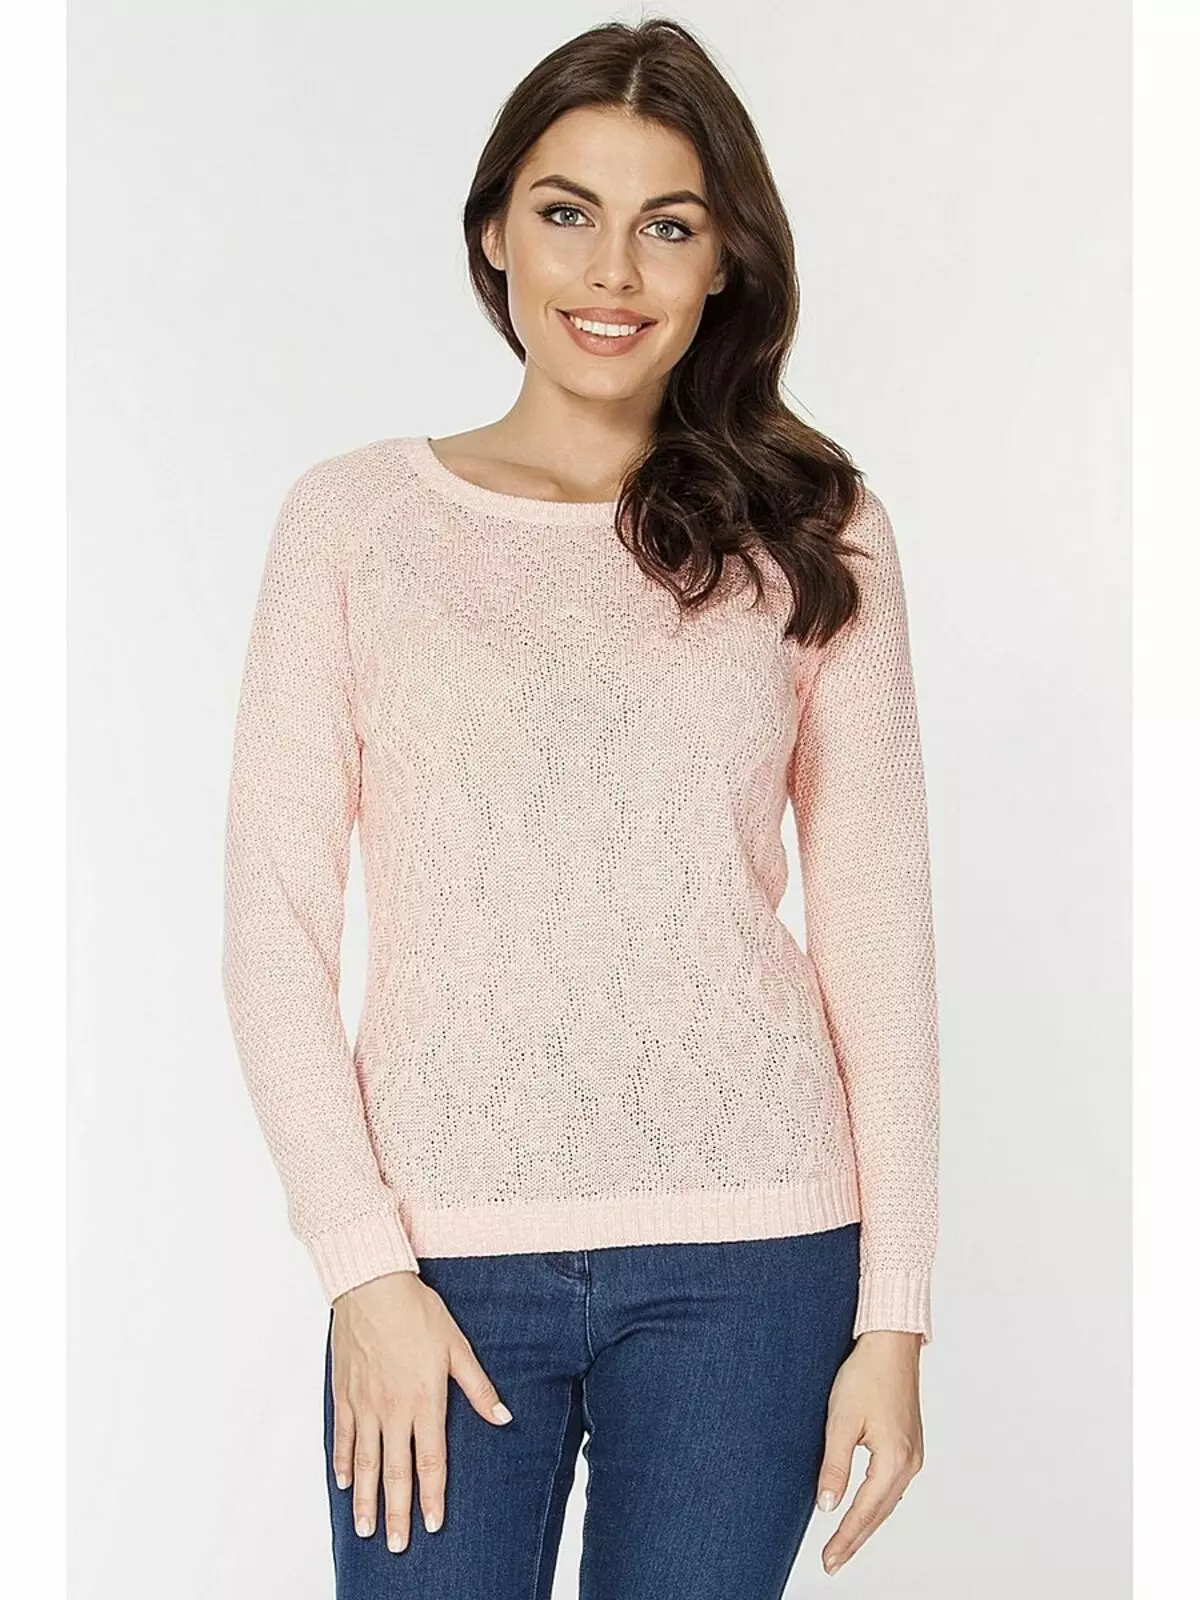 Sweater: Apa itu, perbezaan dari jumper, kardigan dan sweatshirt 1012_22